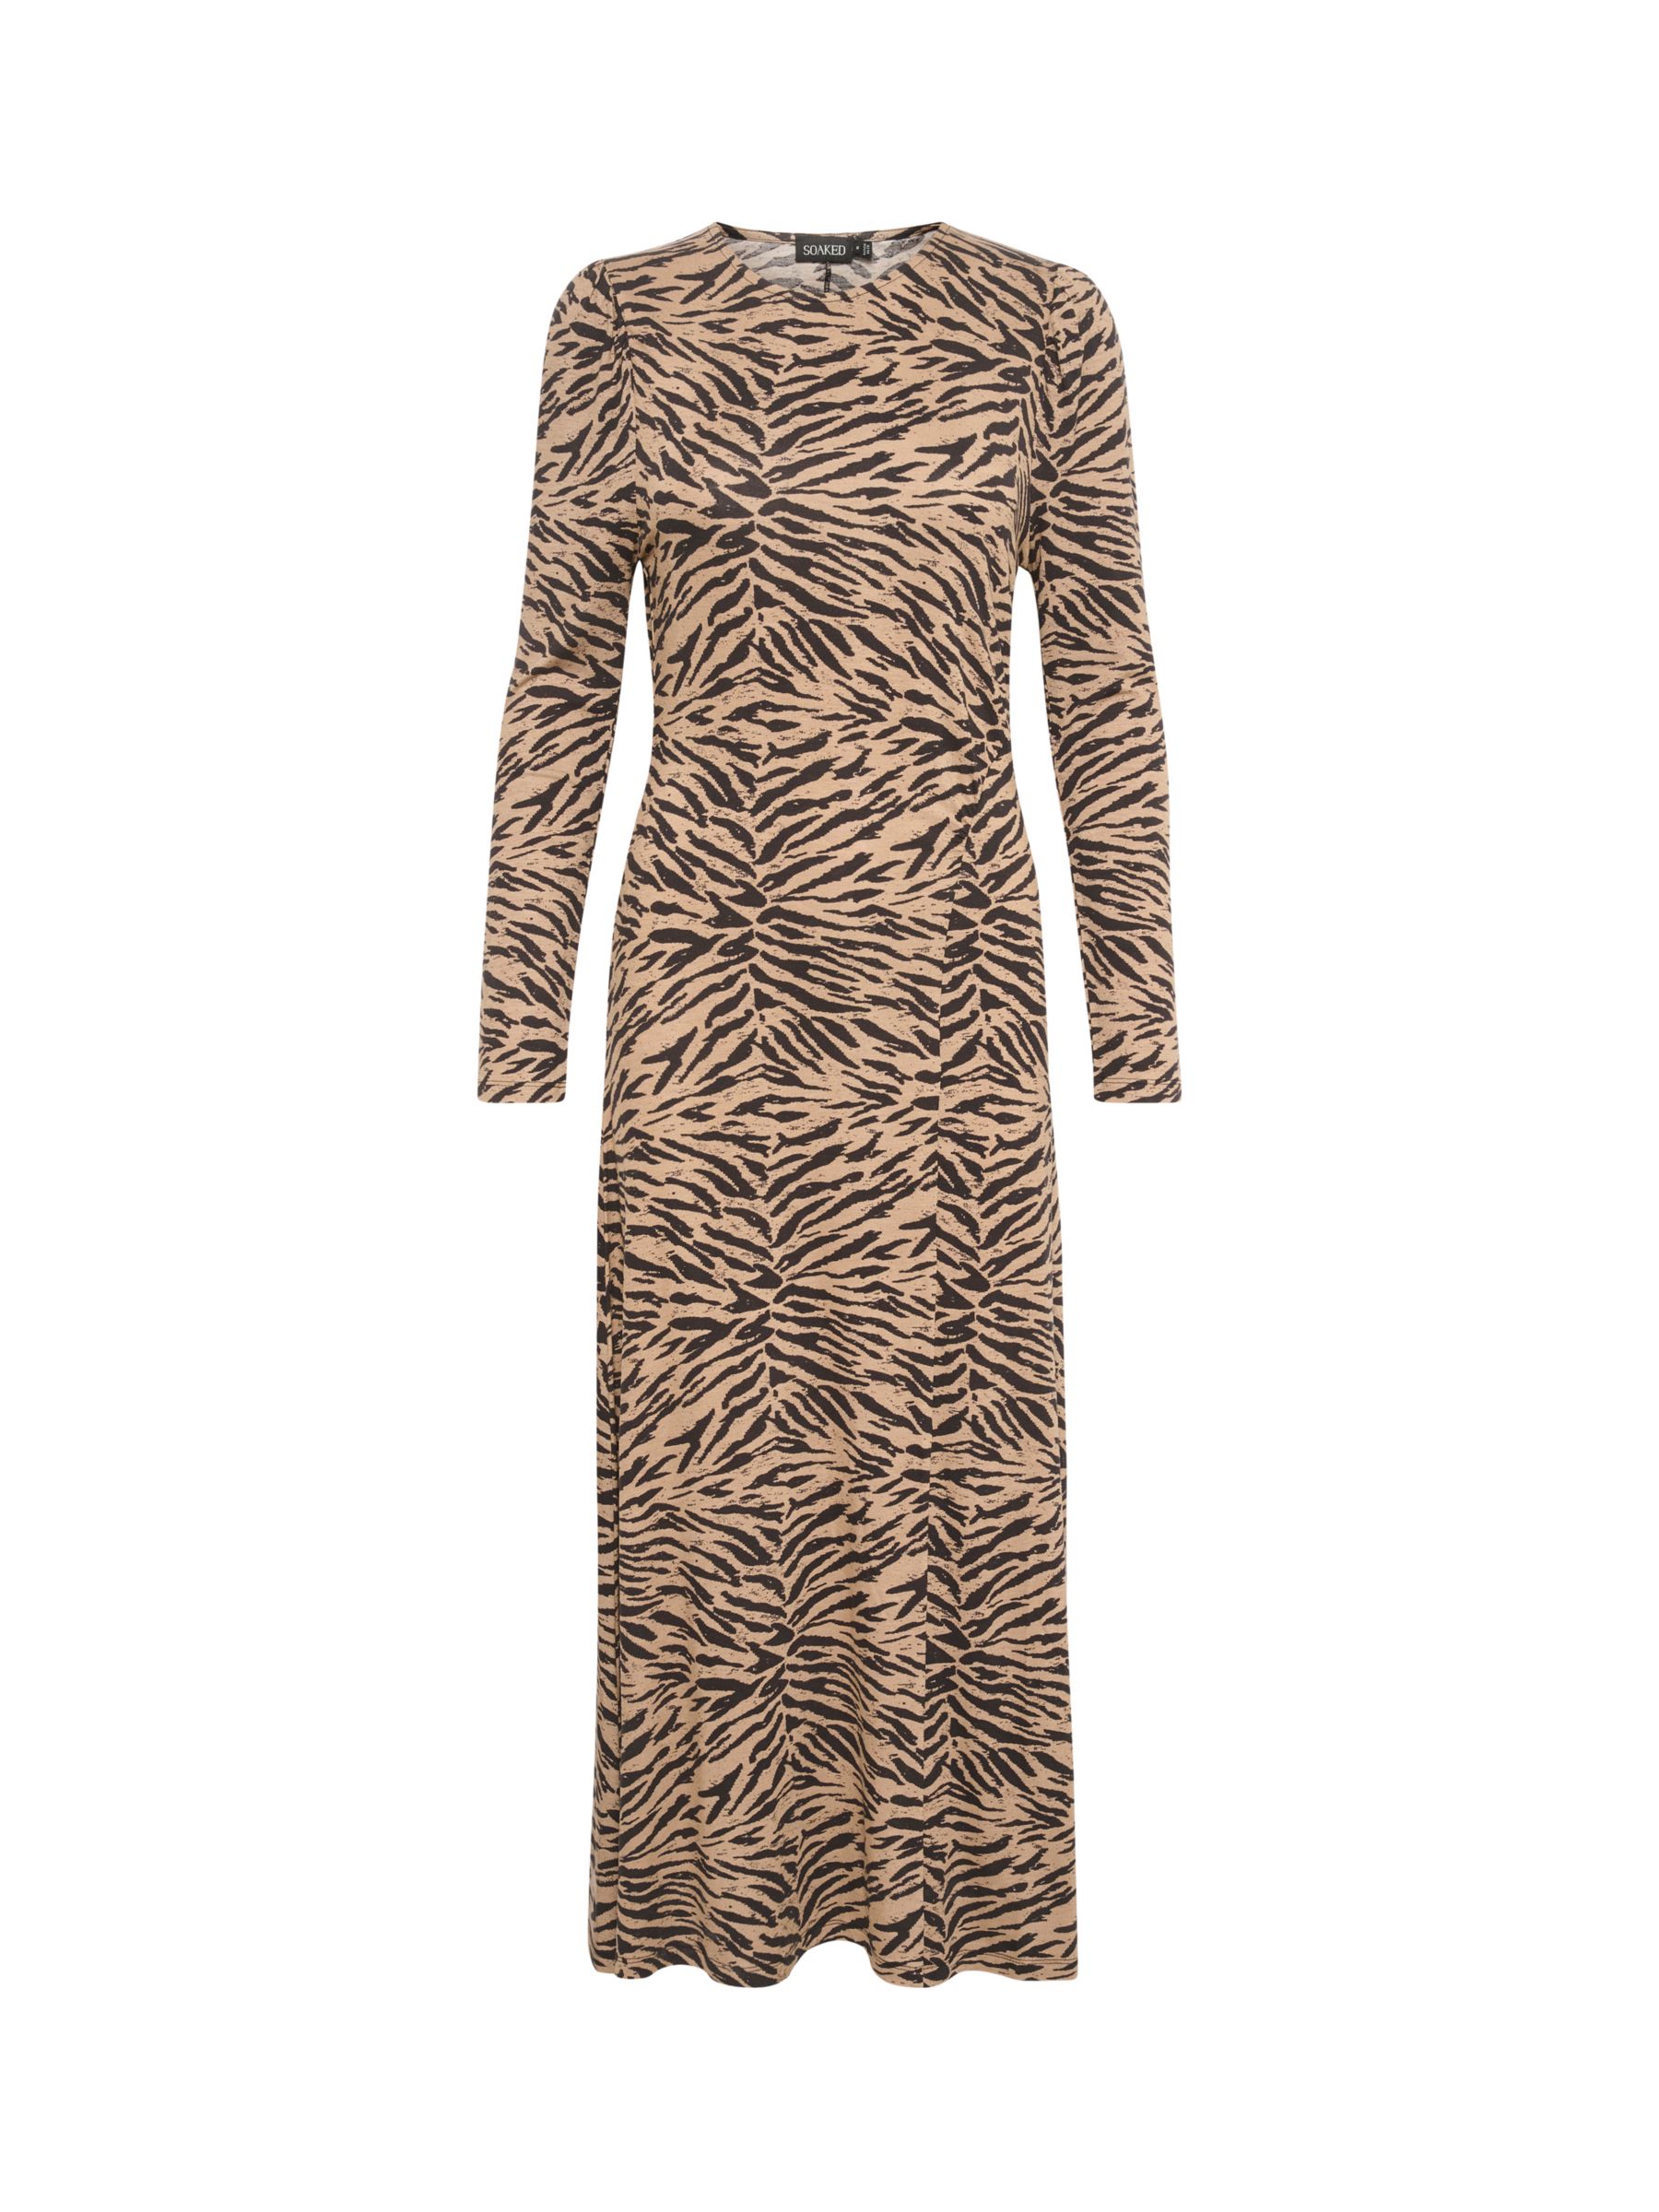 Buy Soaked In Luxury Hanadi Printed Jersey Midi Dress, Kelp Animal Online at johnlewis.com